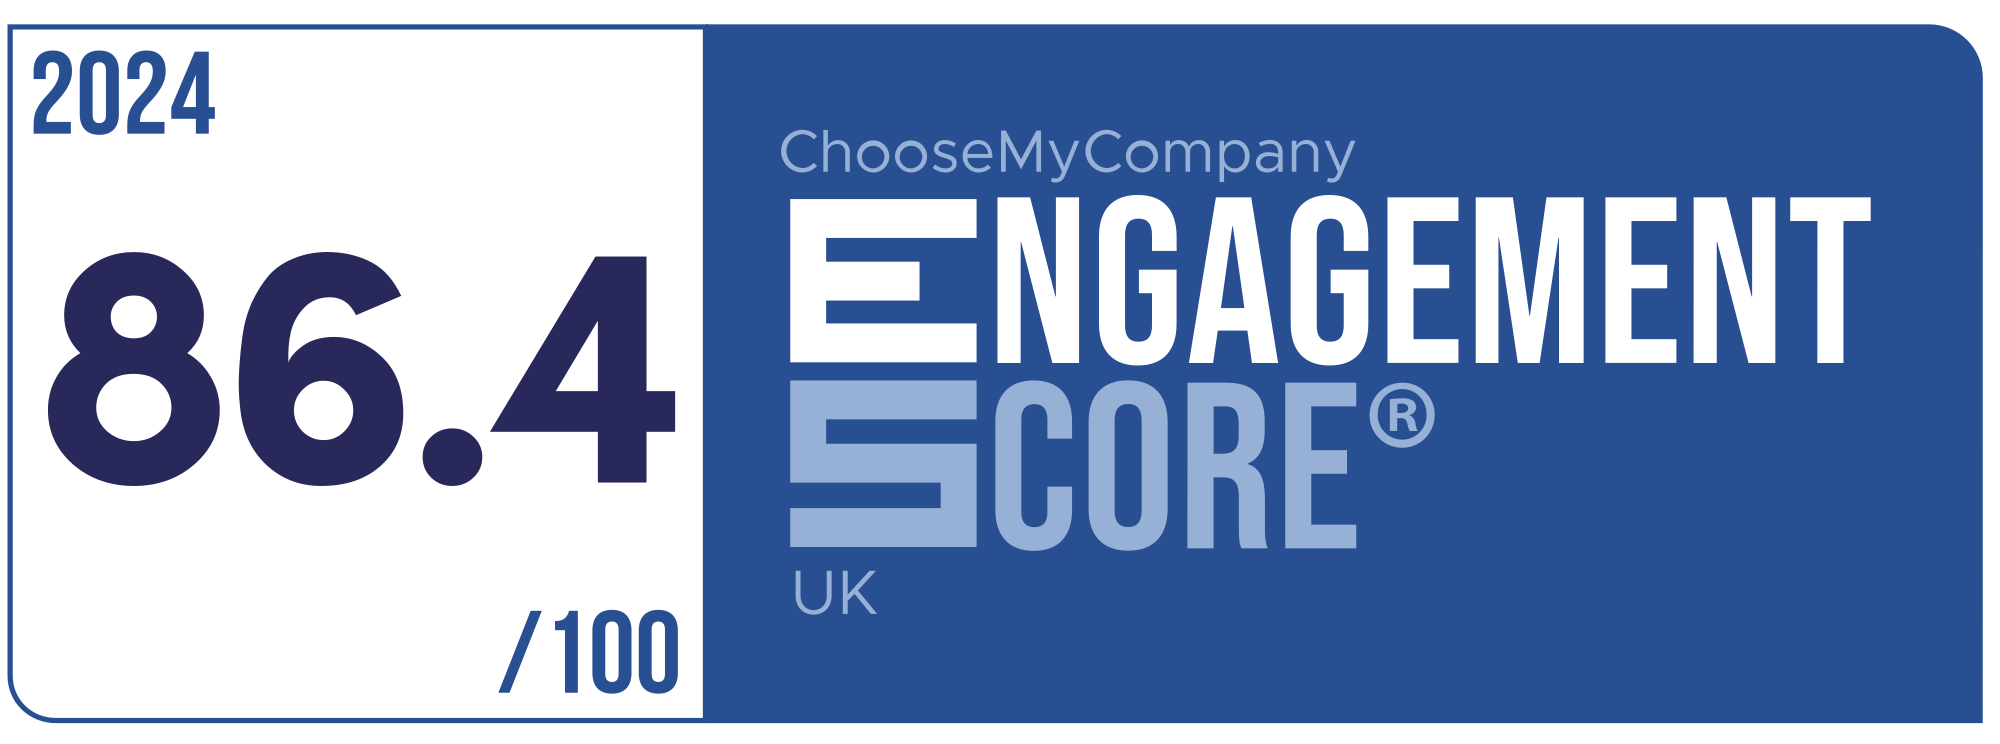 Label Engagement Score 2024 UK